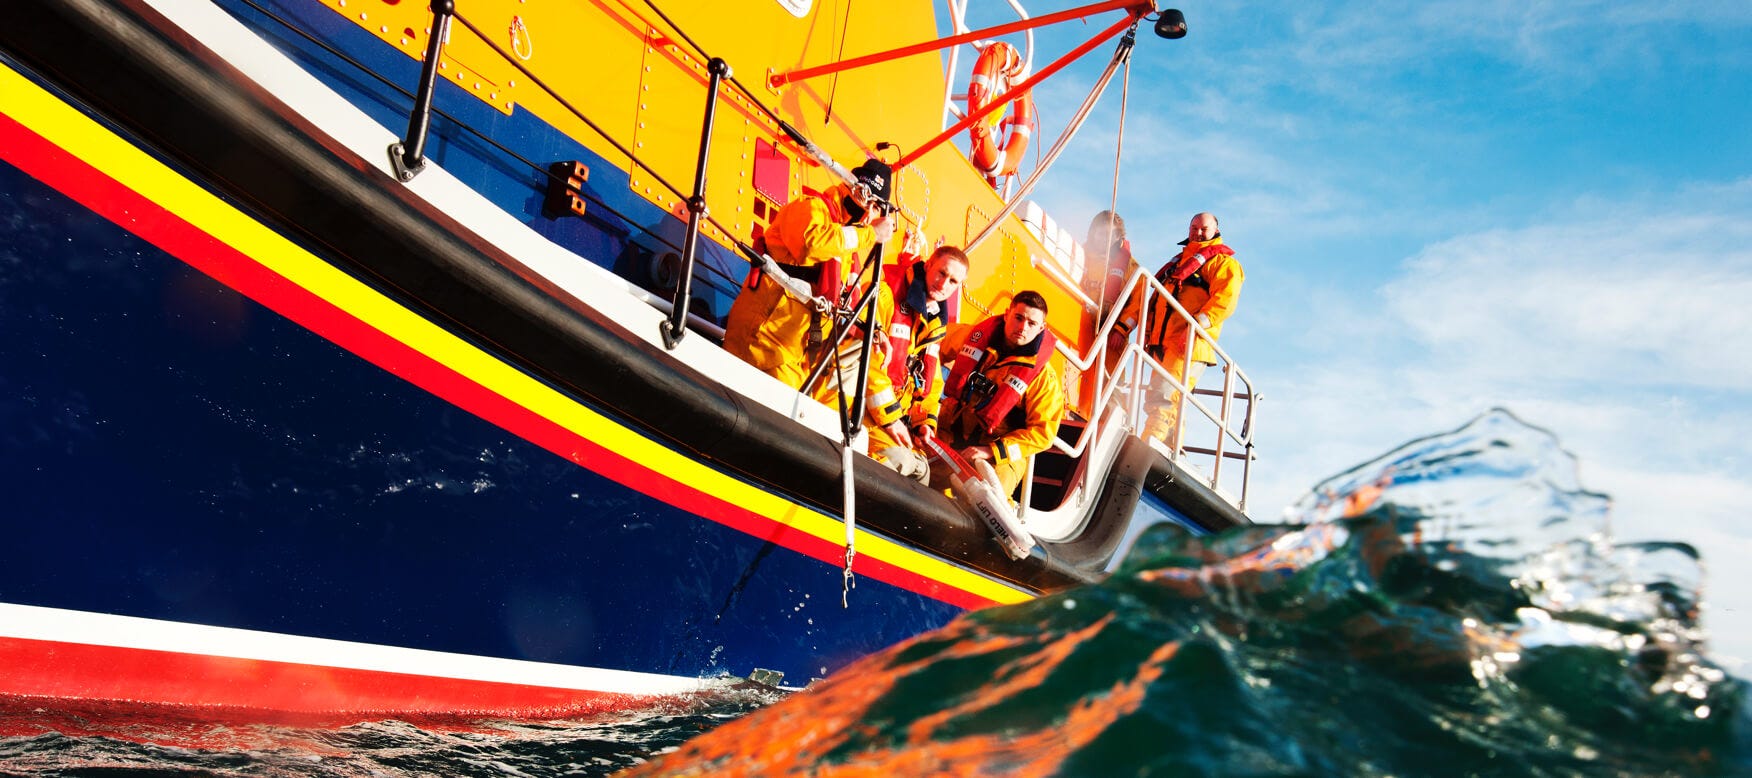 RNLI Girvan Lifeboat